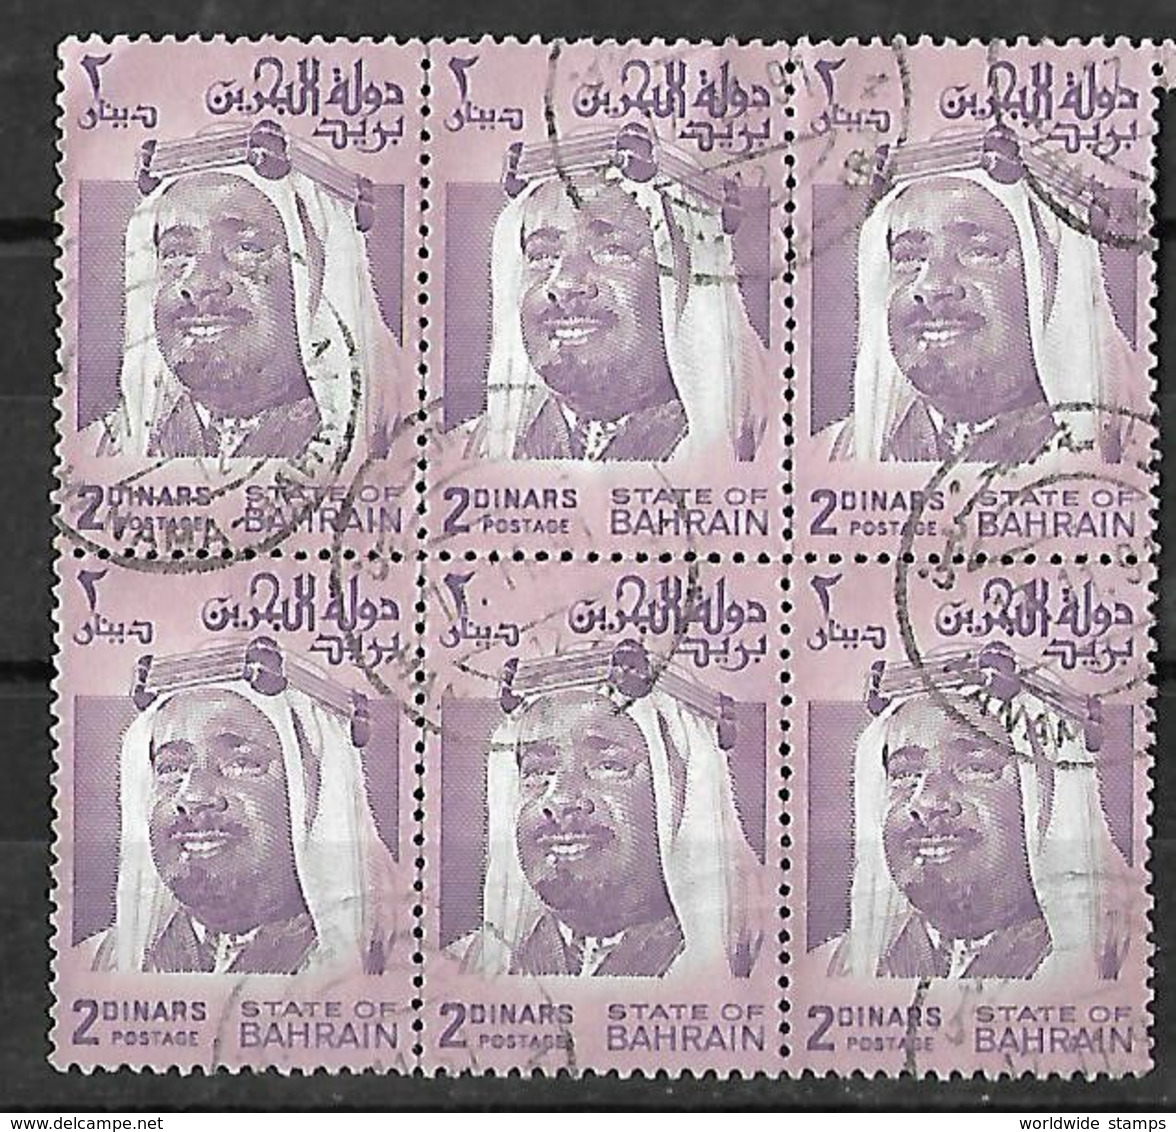 Bahrain 1976 DEFINITIVES ISA BIN SALMAN AL-KHALIFA 2 Dinar Block Of 6 Very Fine Used USED - Bahrain (1965-...)